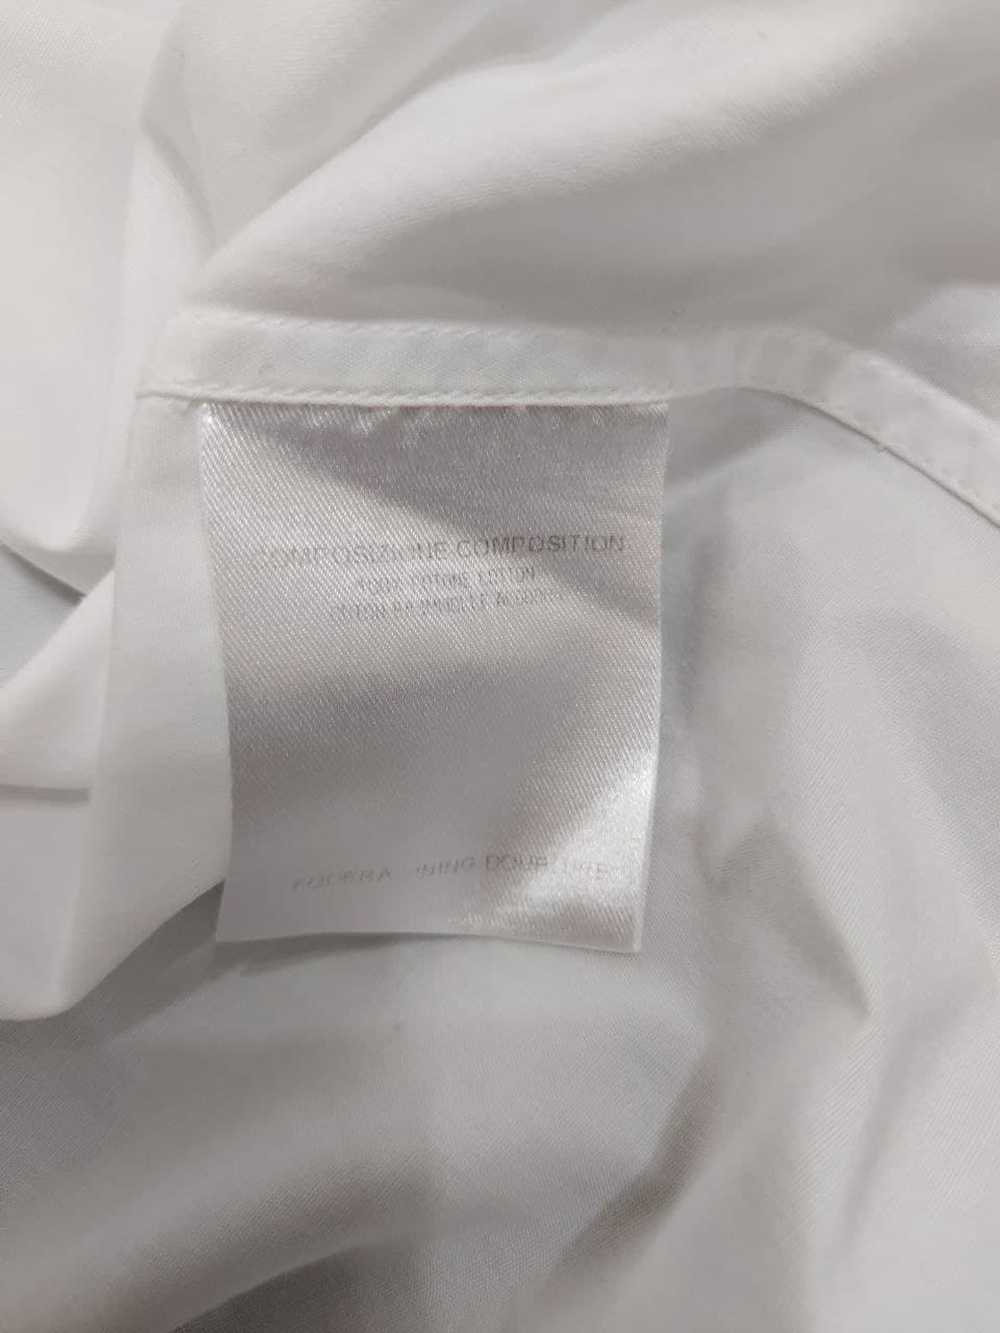 Yves Saint Laurent Shirt - image 3